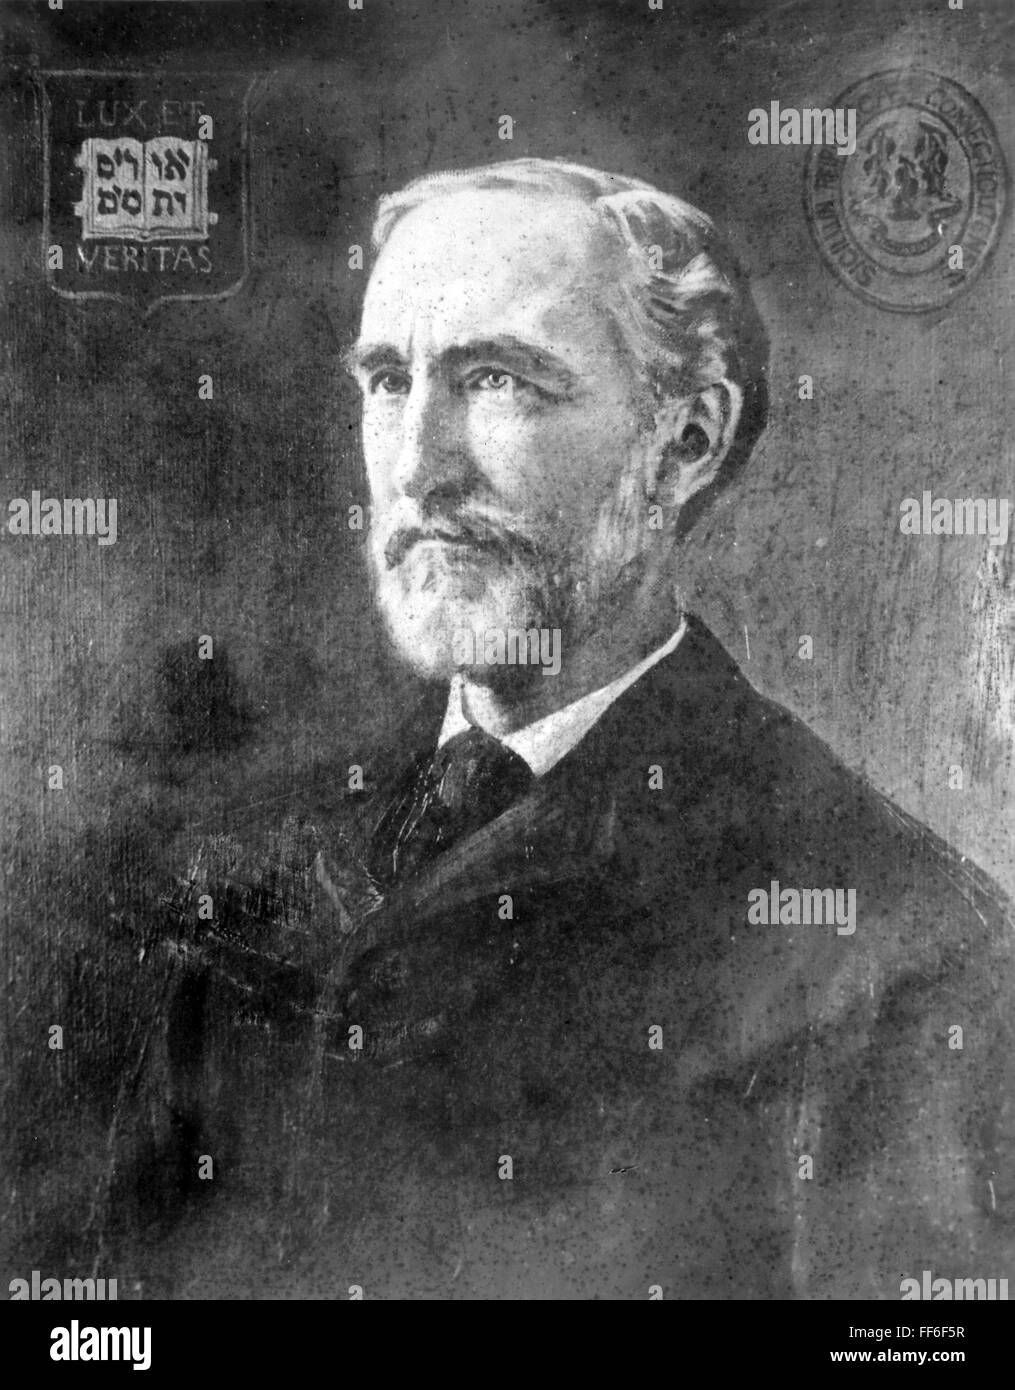 JOSIAH WILLARD GIBBS (1839-1903). American physicist. Stock Photo